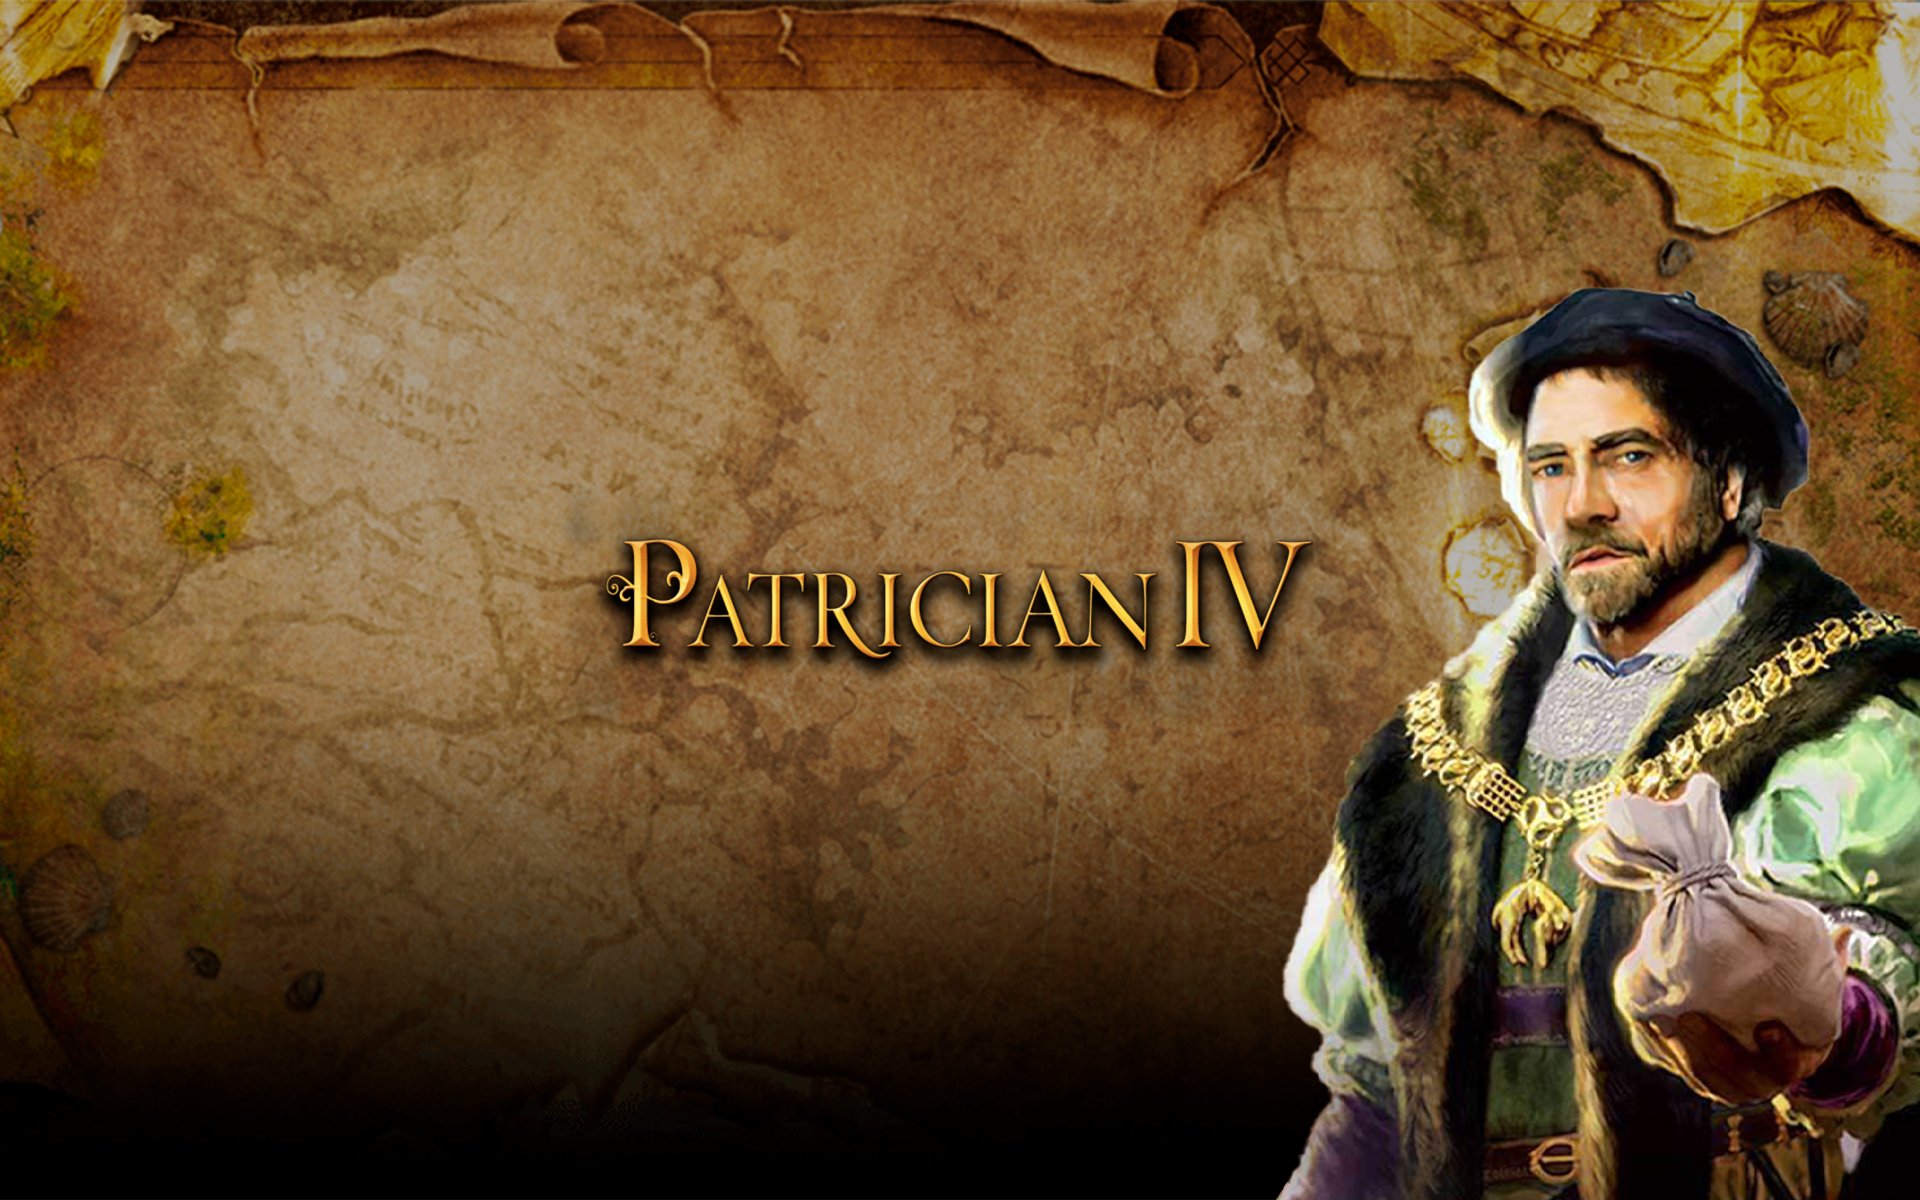 Patrician IV por R$ 27.99